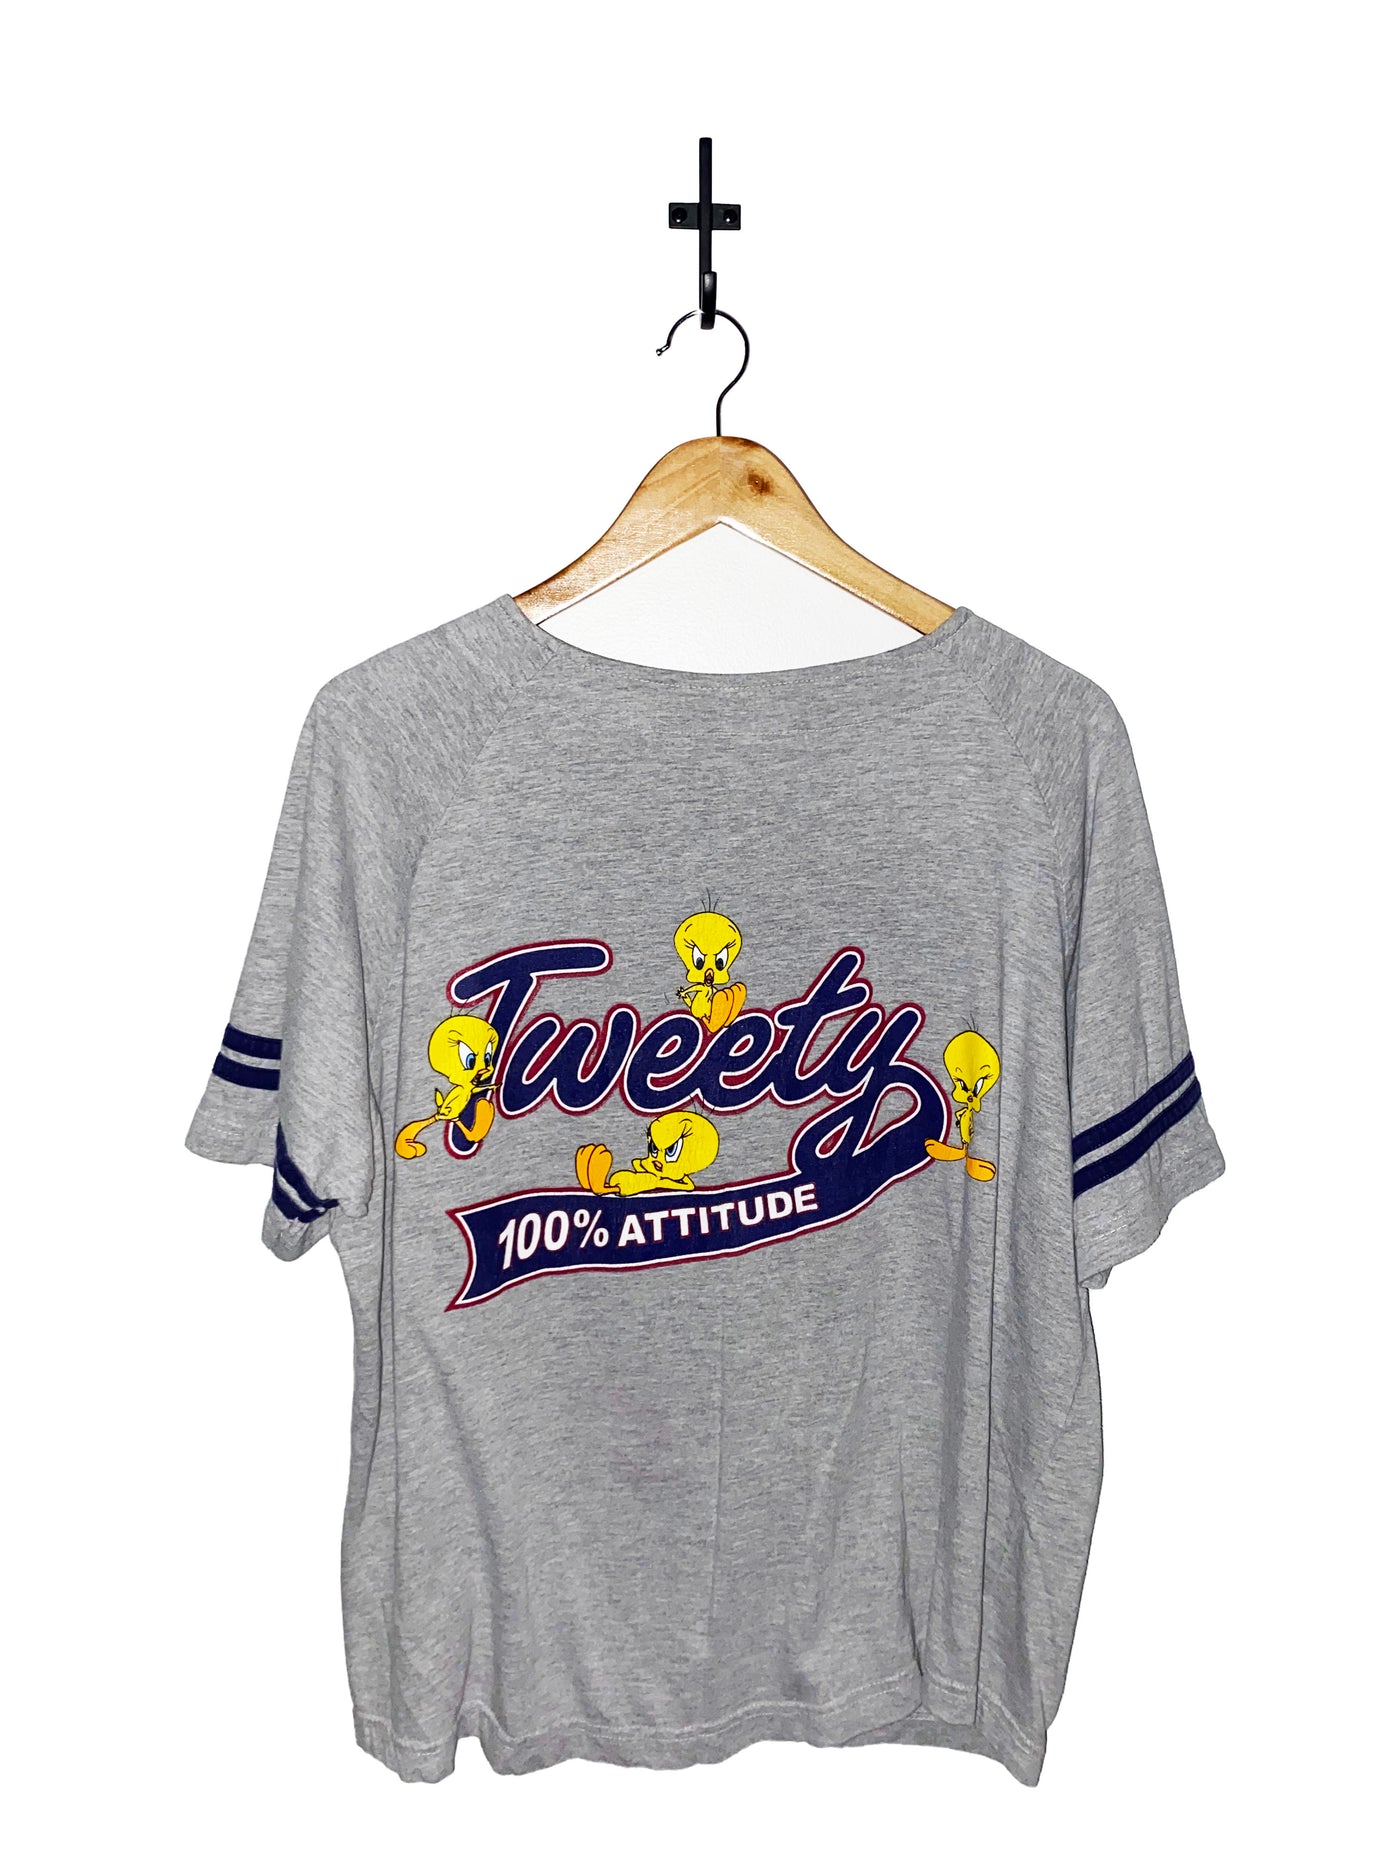 Vintage Tweety ‘100% Attitude’ Looney Tunes Baseball Jersey